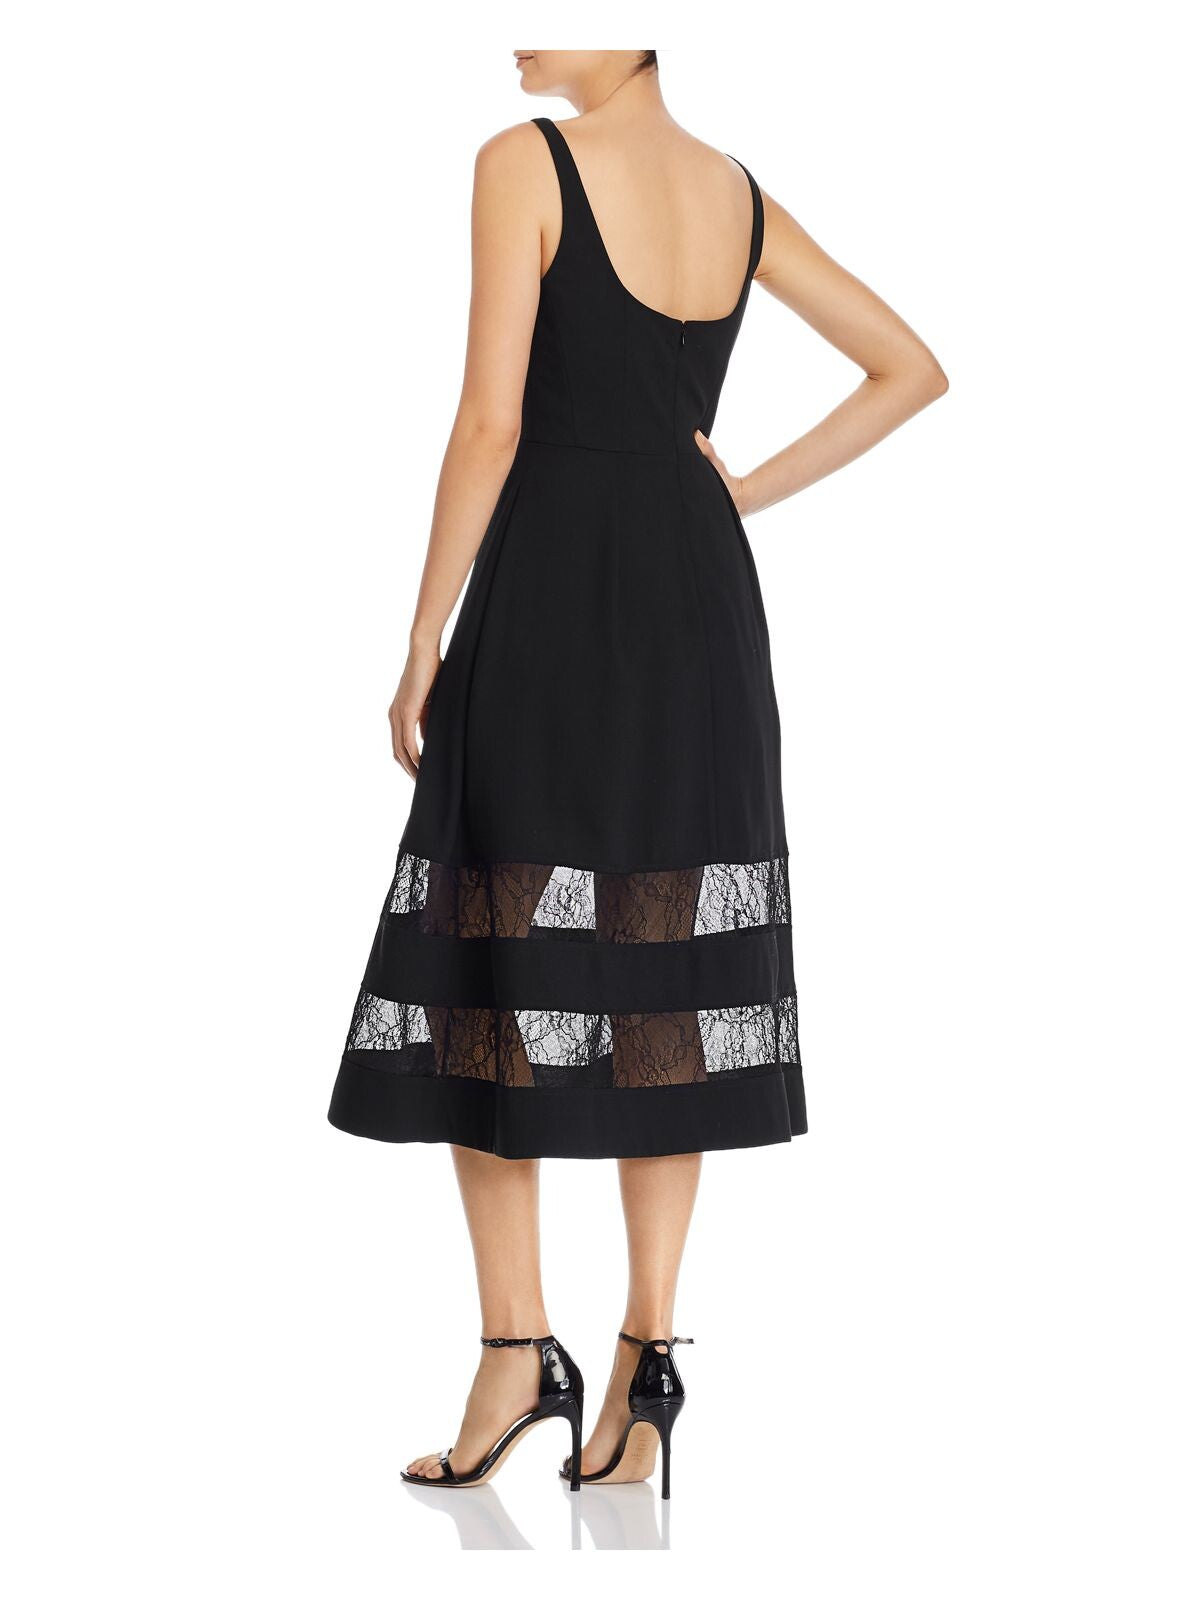 AIDAN MATTOX Womens Black Sheer Spaghetti Strap Square Neck Below The Knee Party Fit + Flare Dress 0